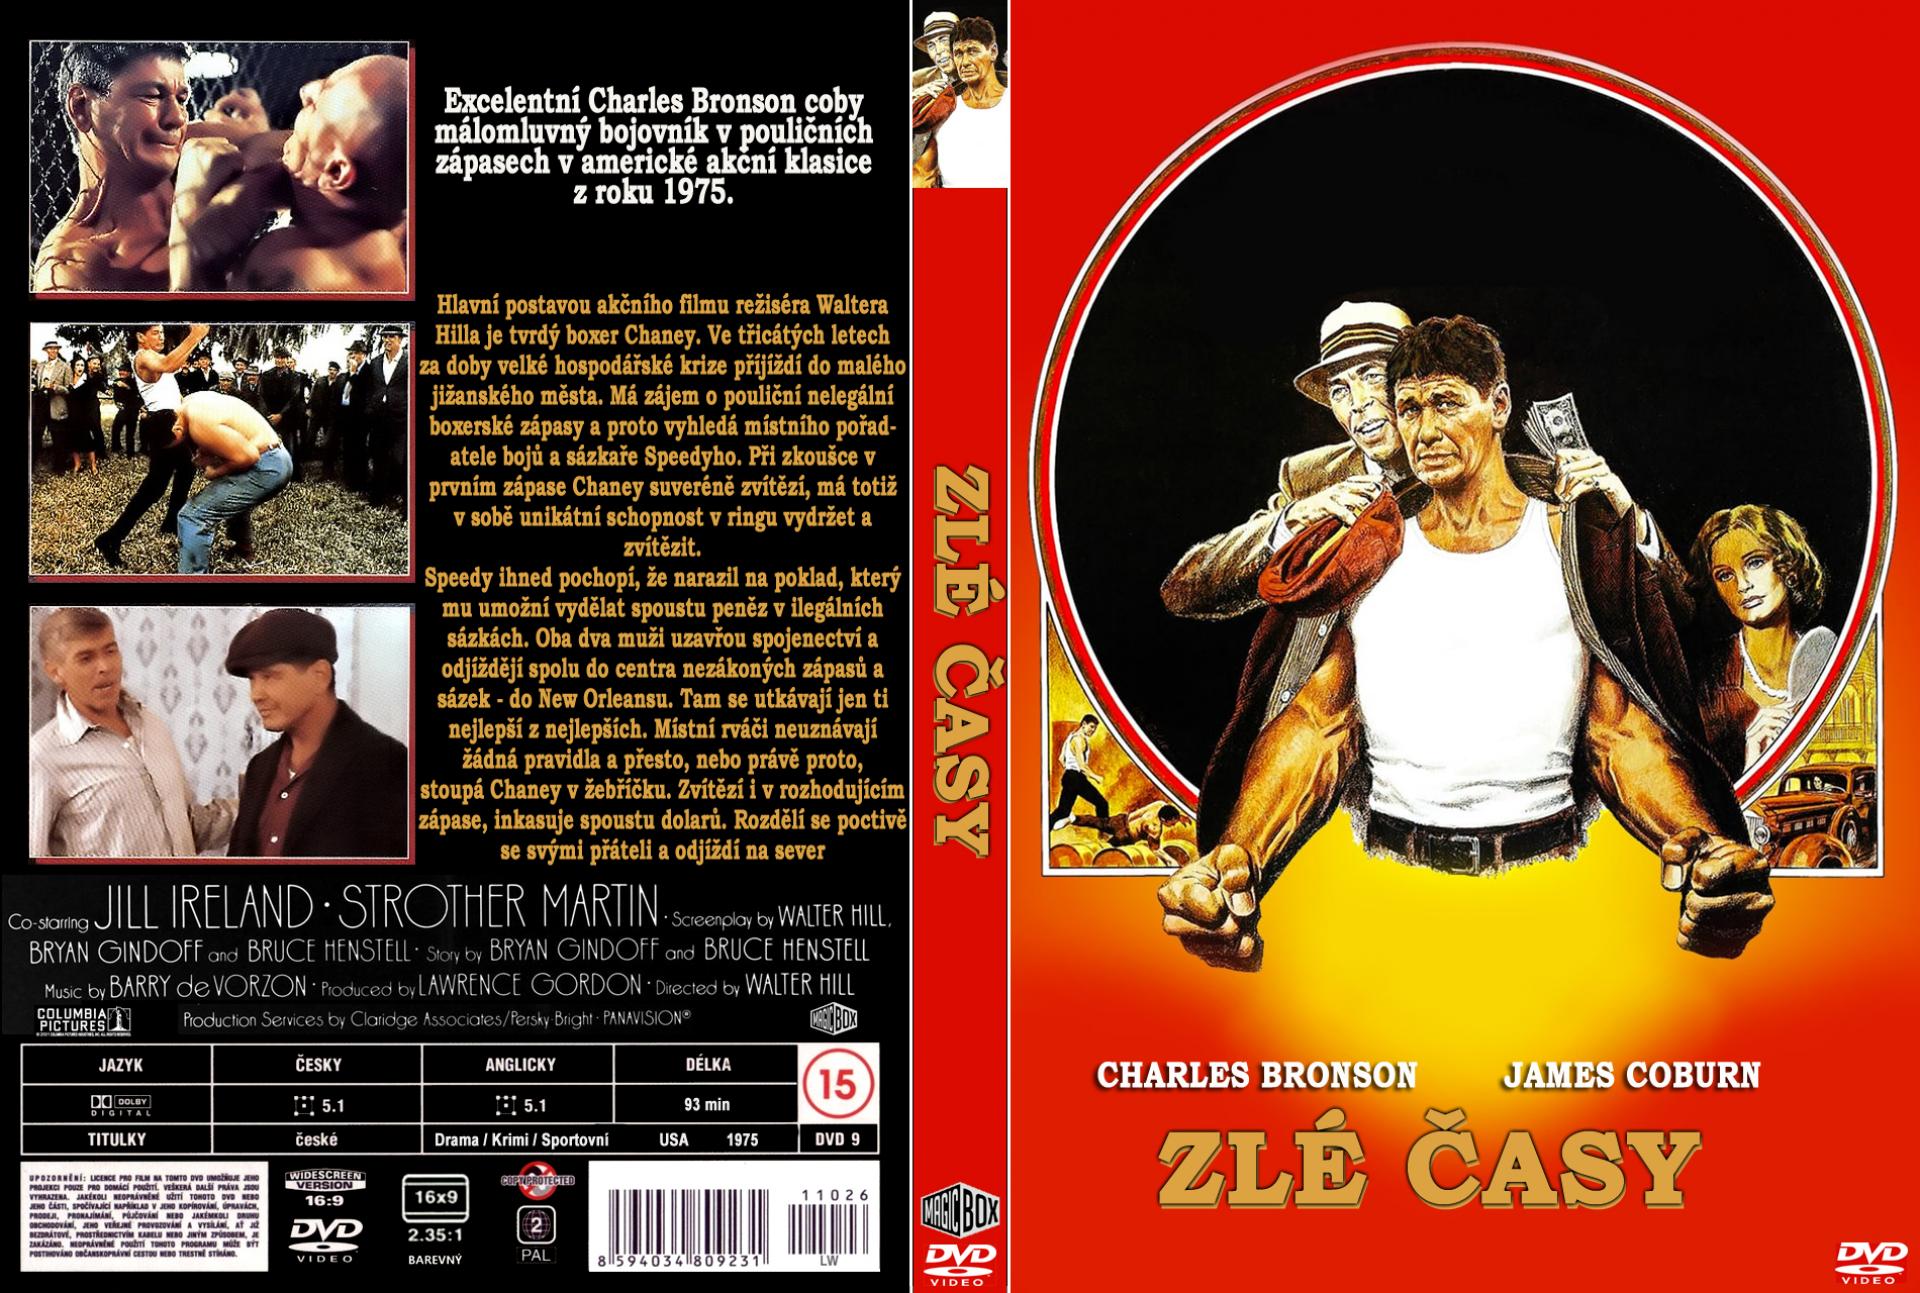 Stiahni si Filmy CZ/SK dabing Zle casy / Hard Times (1975)(CZ) = CSFD 73%